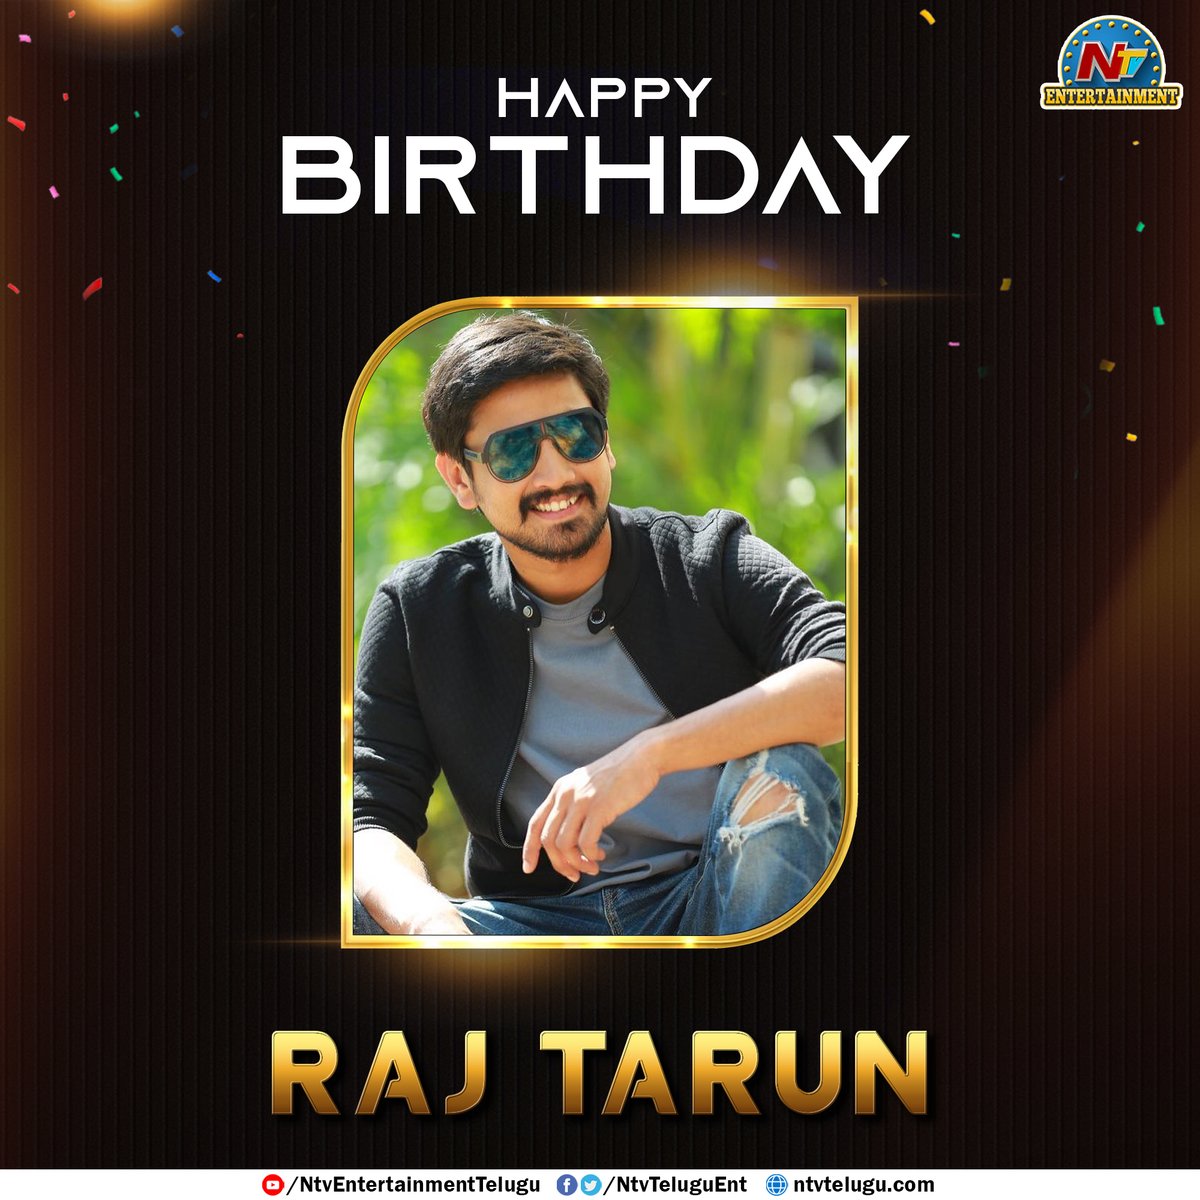 Join us in Wishing @itsRajTarun A Very Happy Birthday #HappybirthdayRajTarun #HBDRajTarun #RajTarun #NTVENT